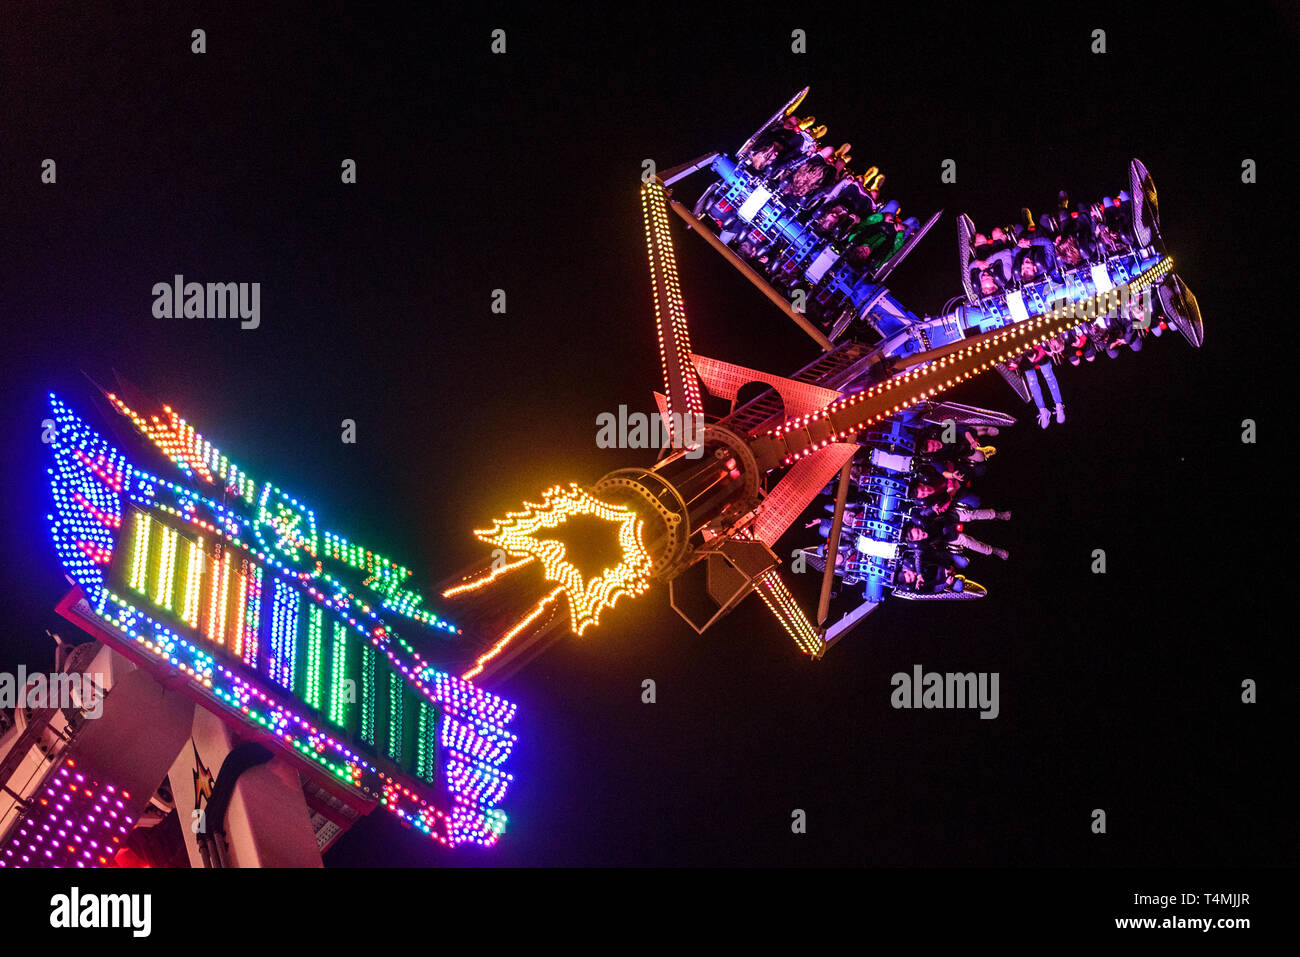 Colorido iluminado - gran atracción de feria carrusel vertical Foto de stock